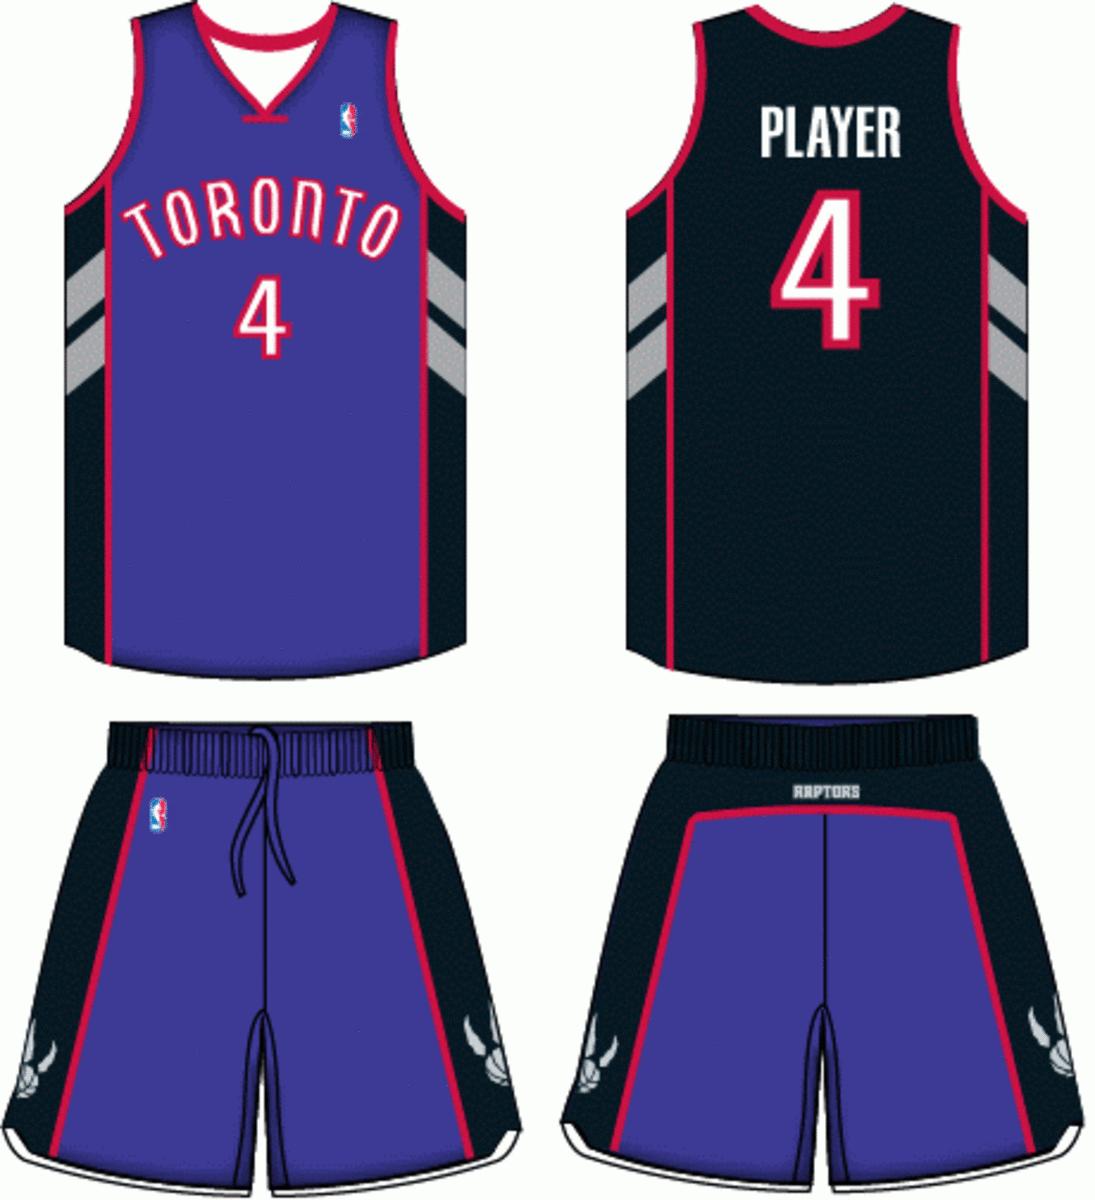 Toronto Raptors getting new logo and uniforms - Sports Illustrated Toronto  Raptors News, Analysis and More